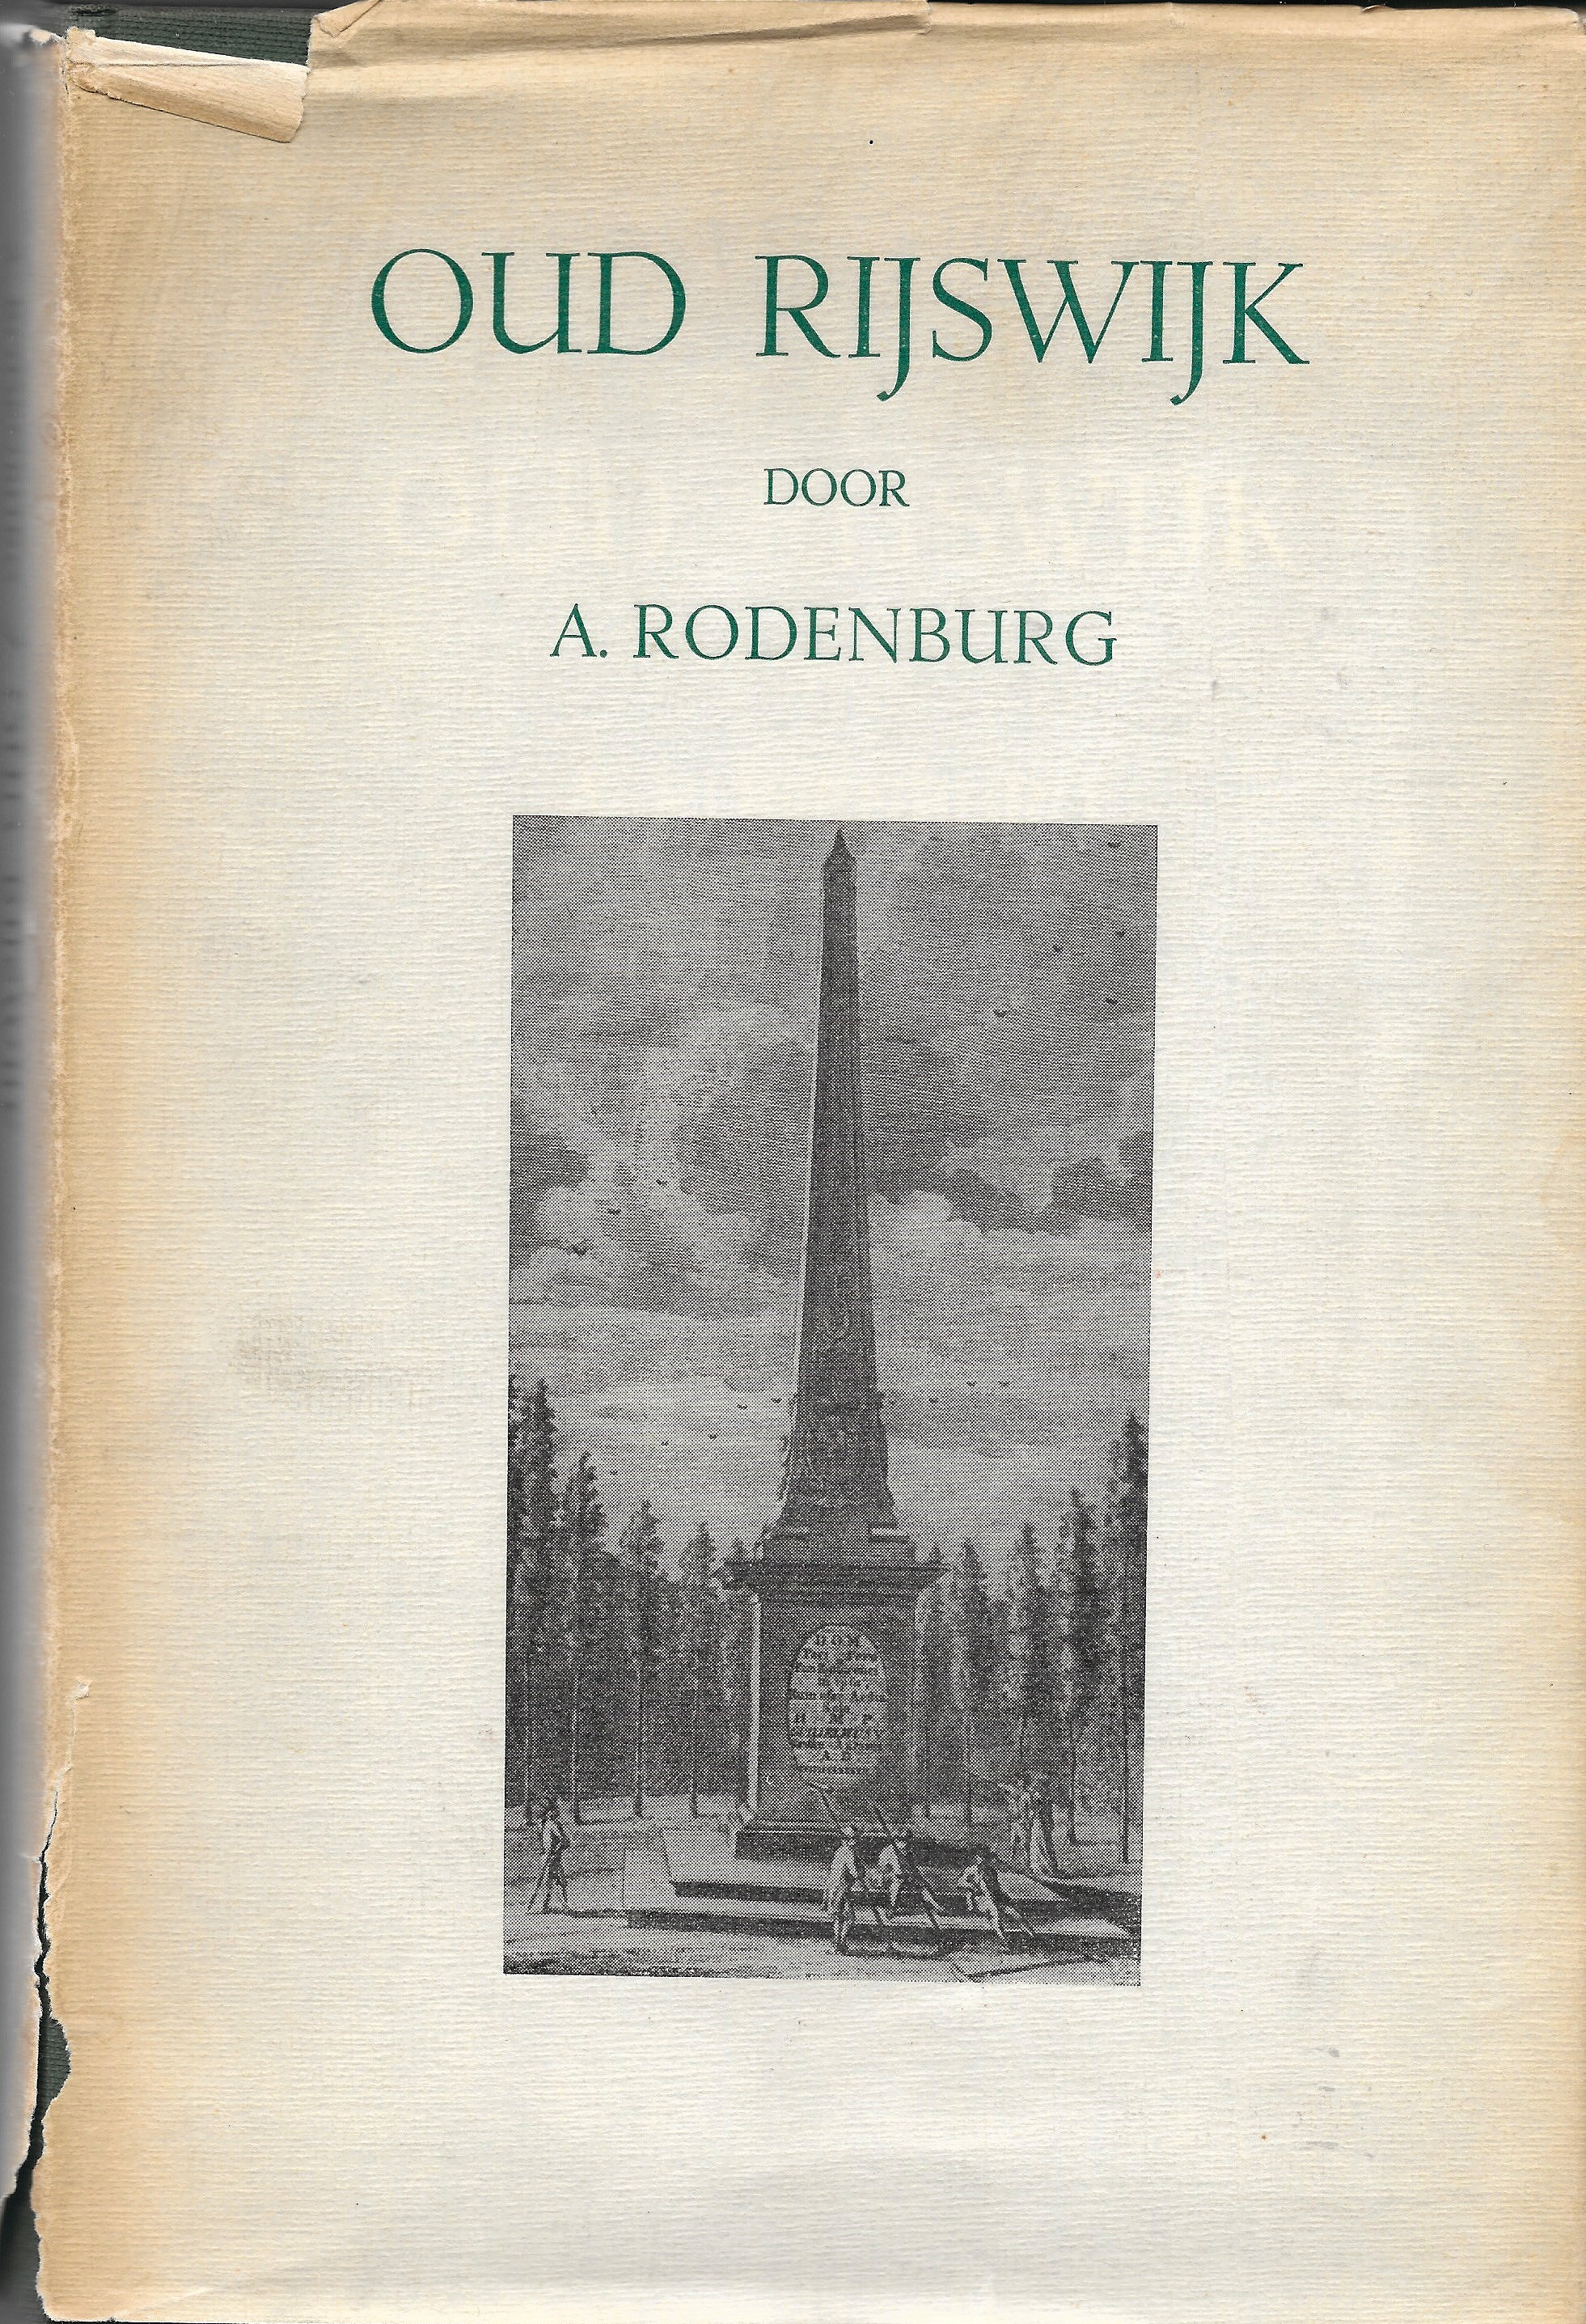 Rodenburg 2